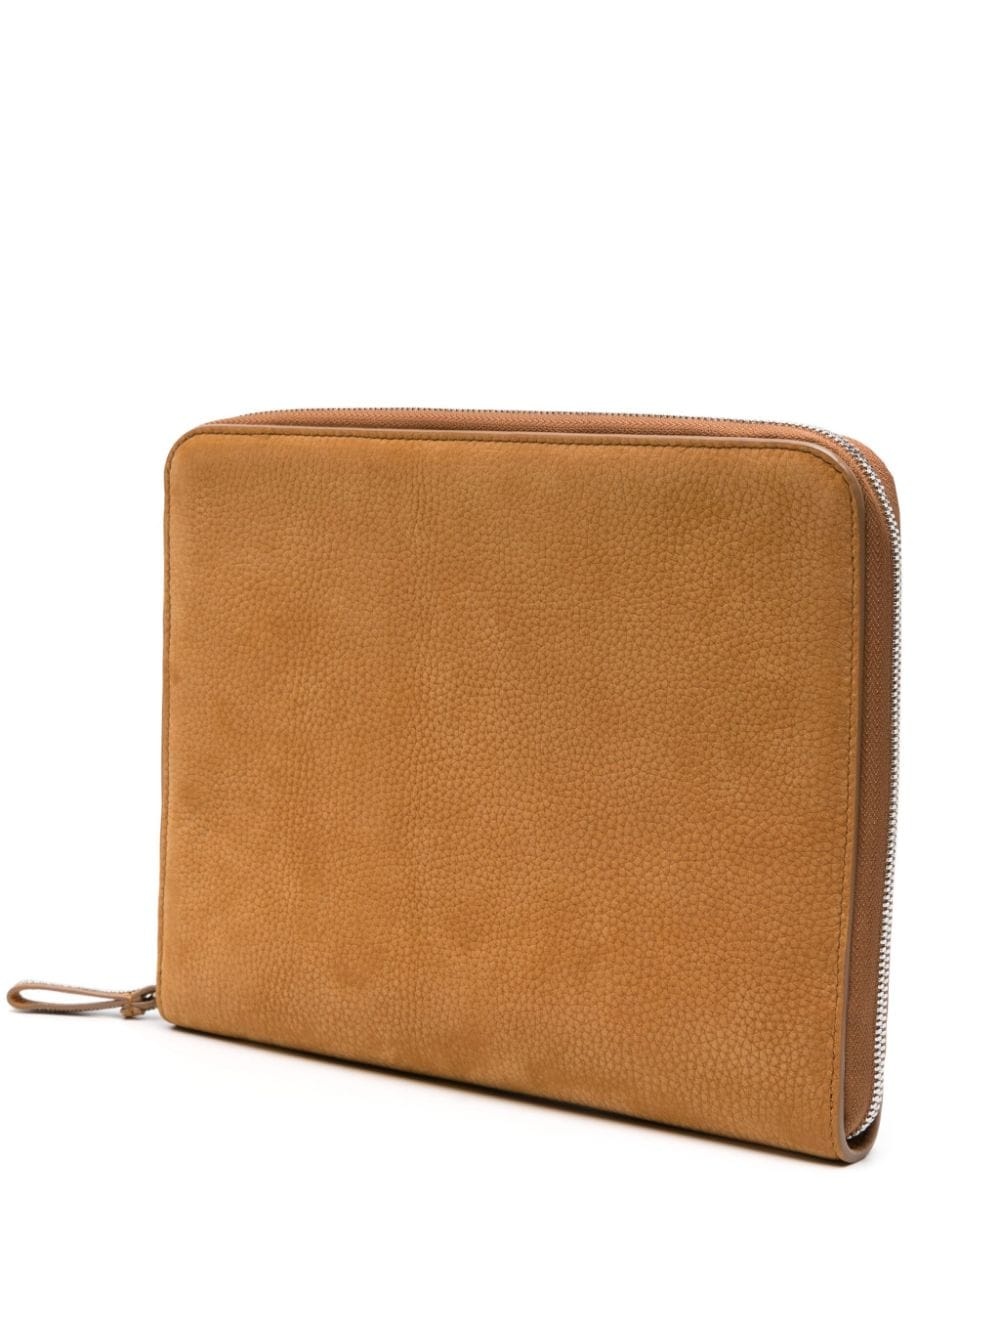 nubuck-leather iPad case - 2